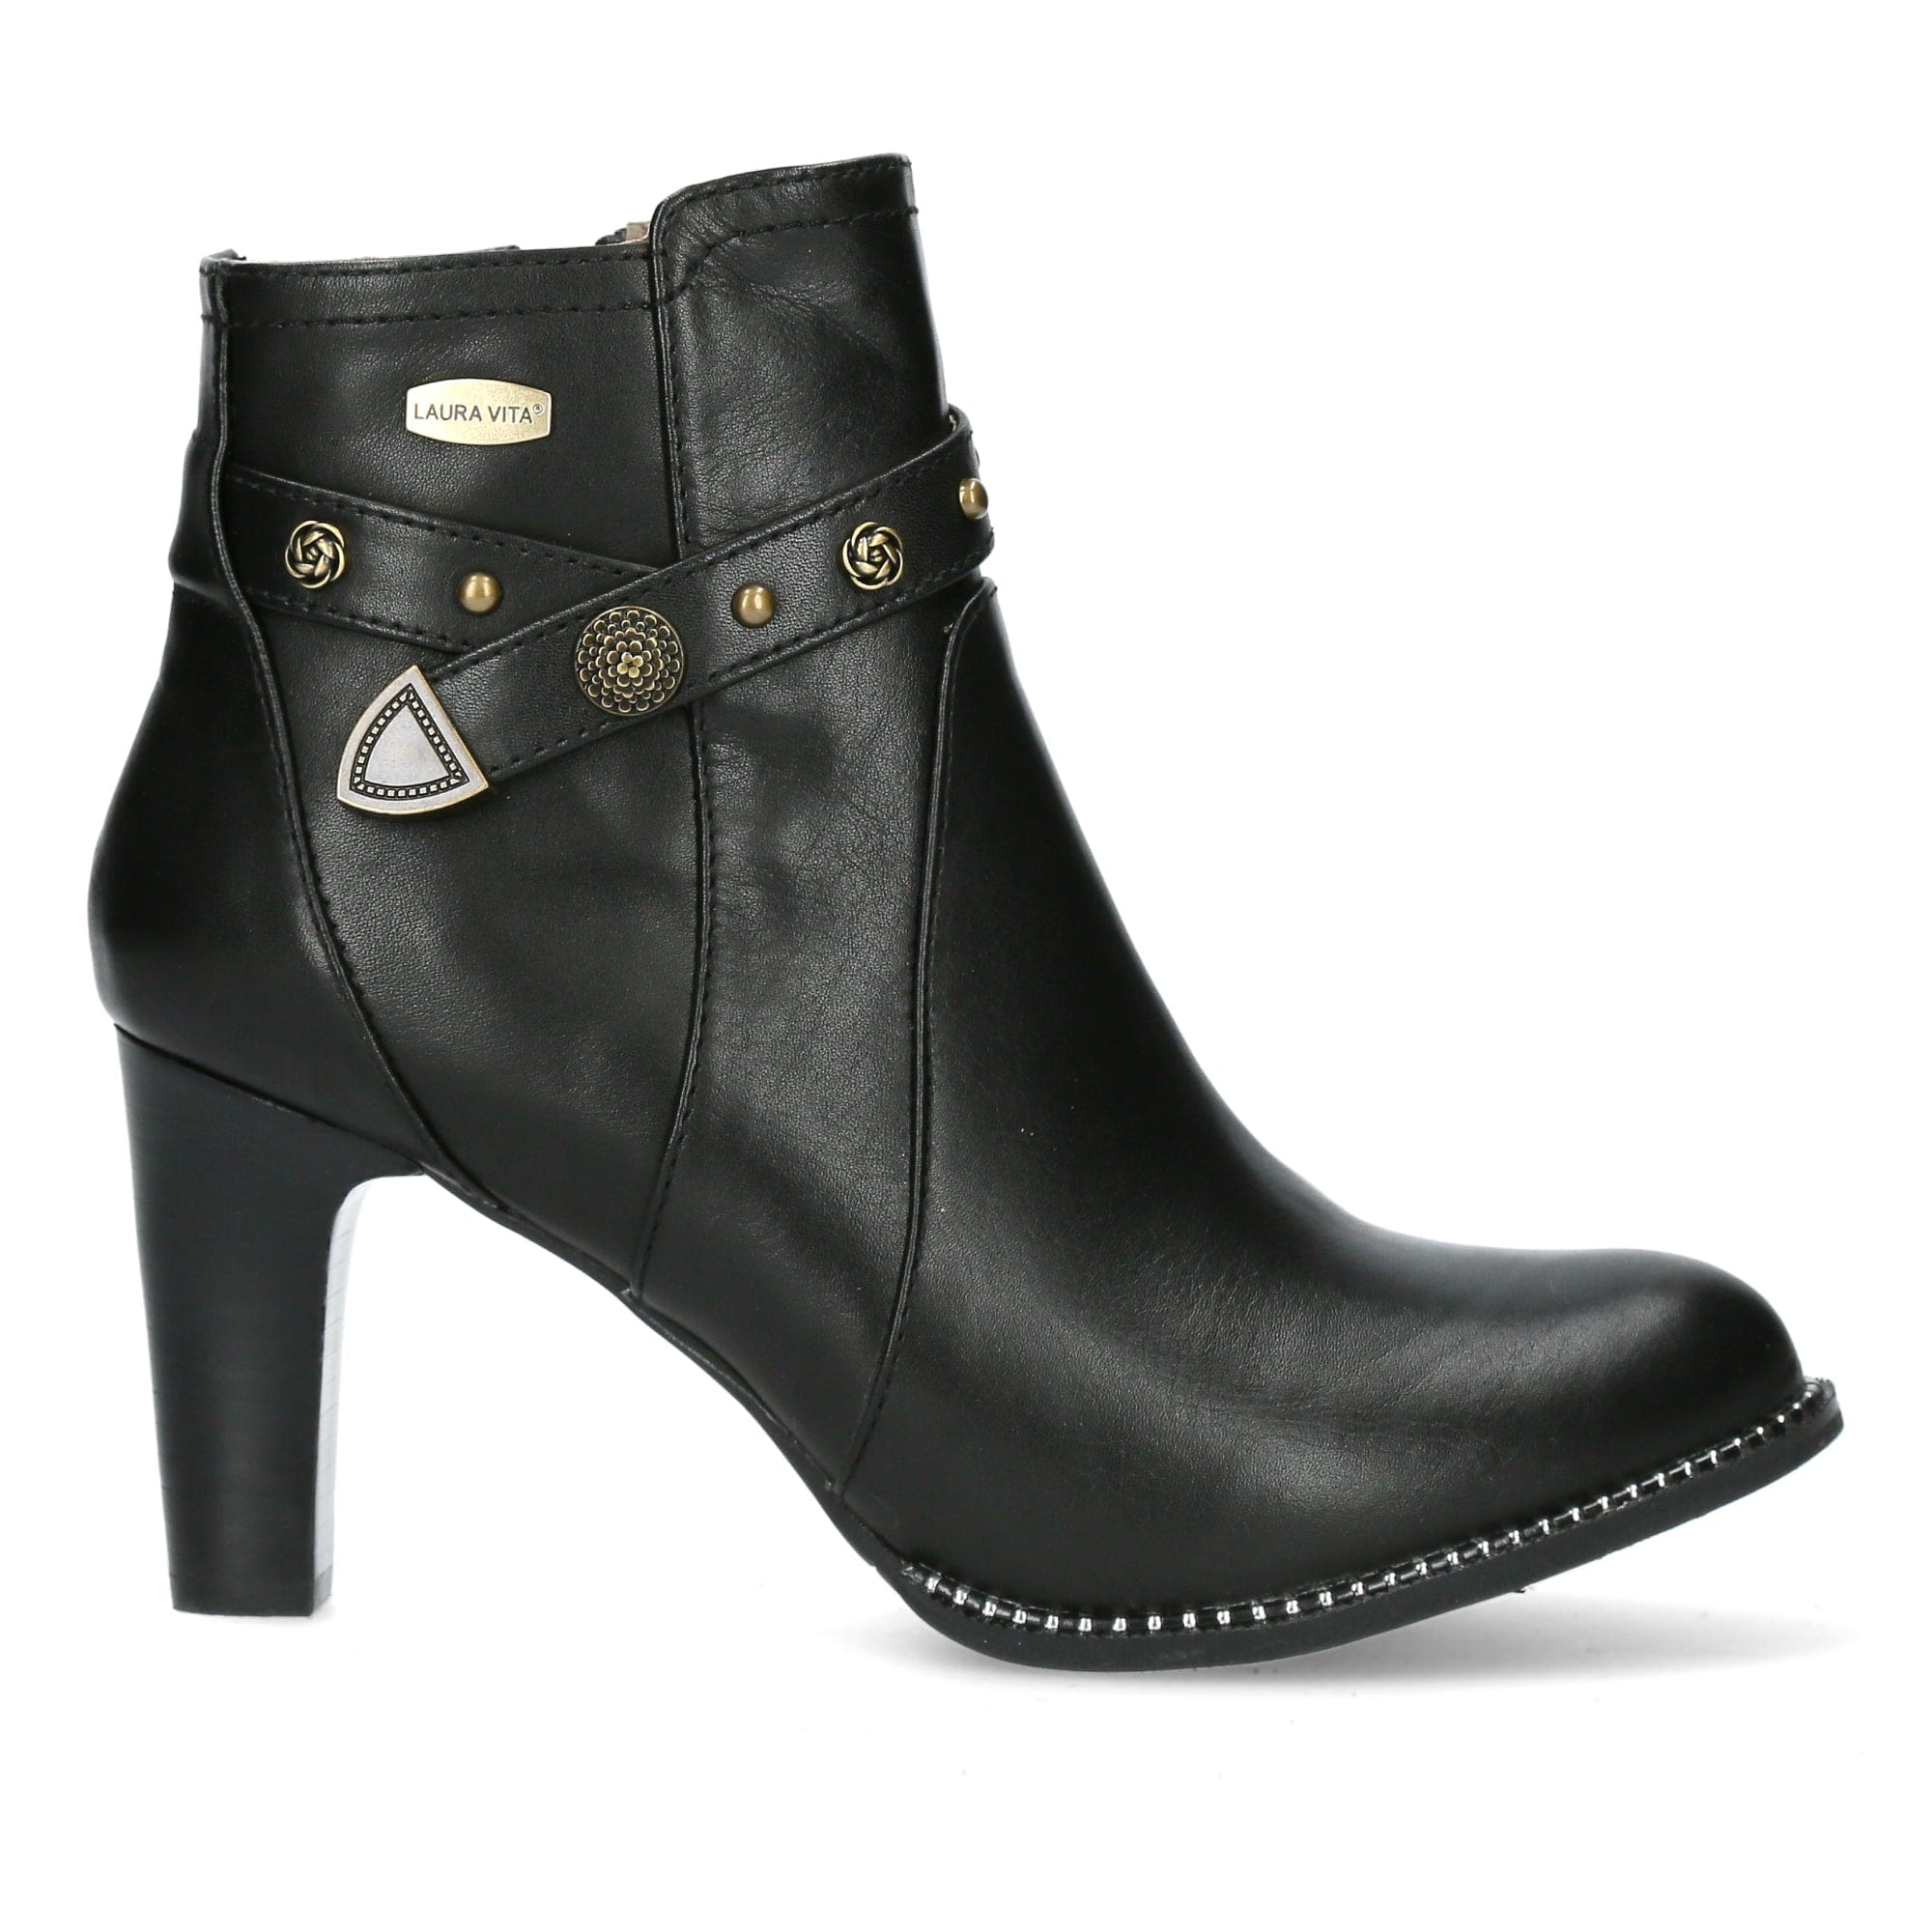 Chaussure ALCBANEO 126 - 35 / Noir uni - Boots